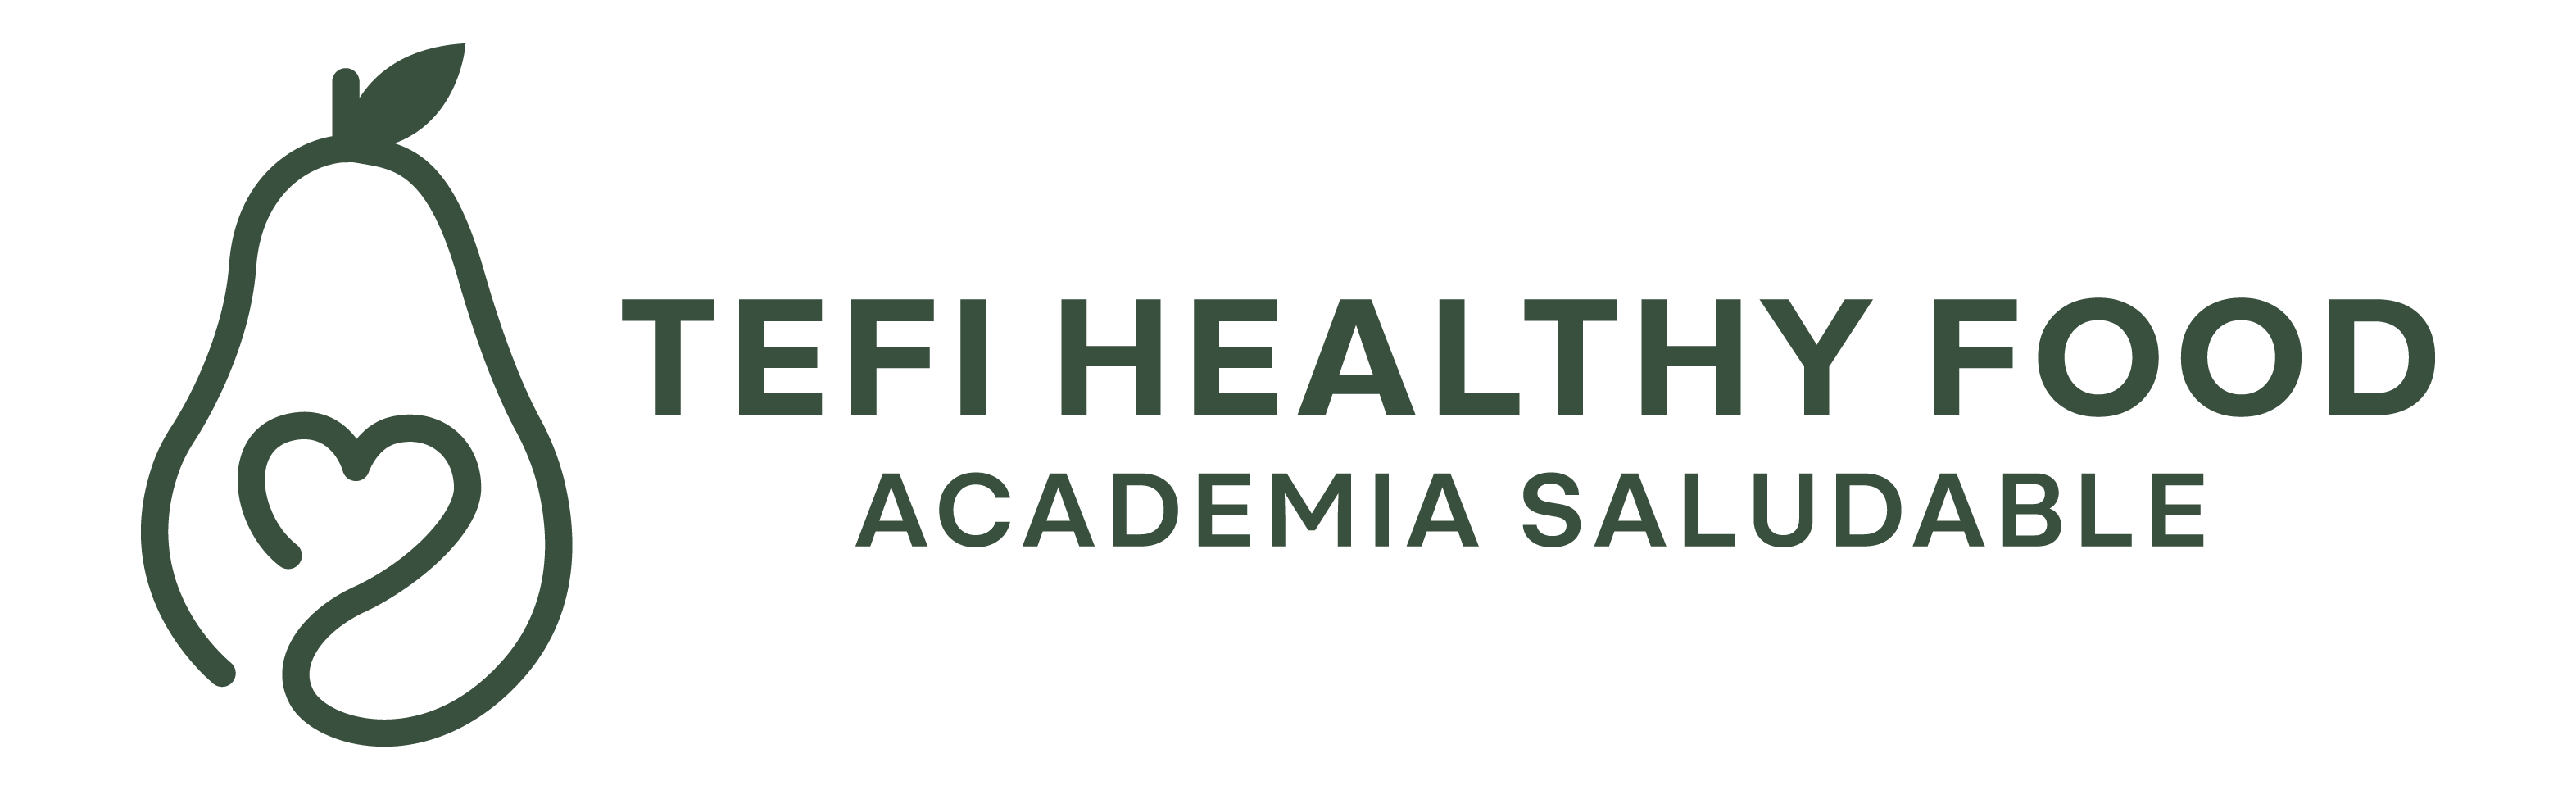 Academia saludable